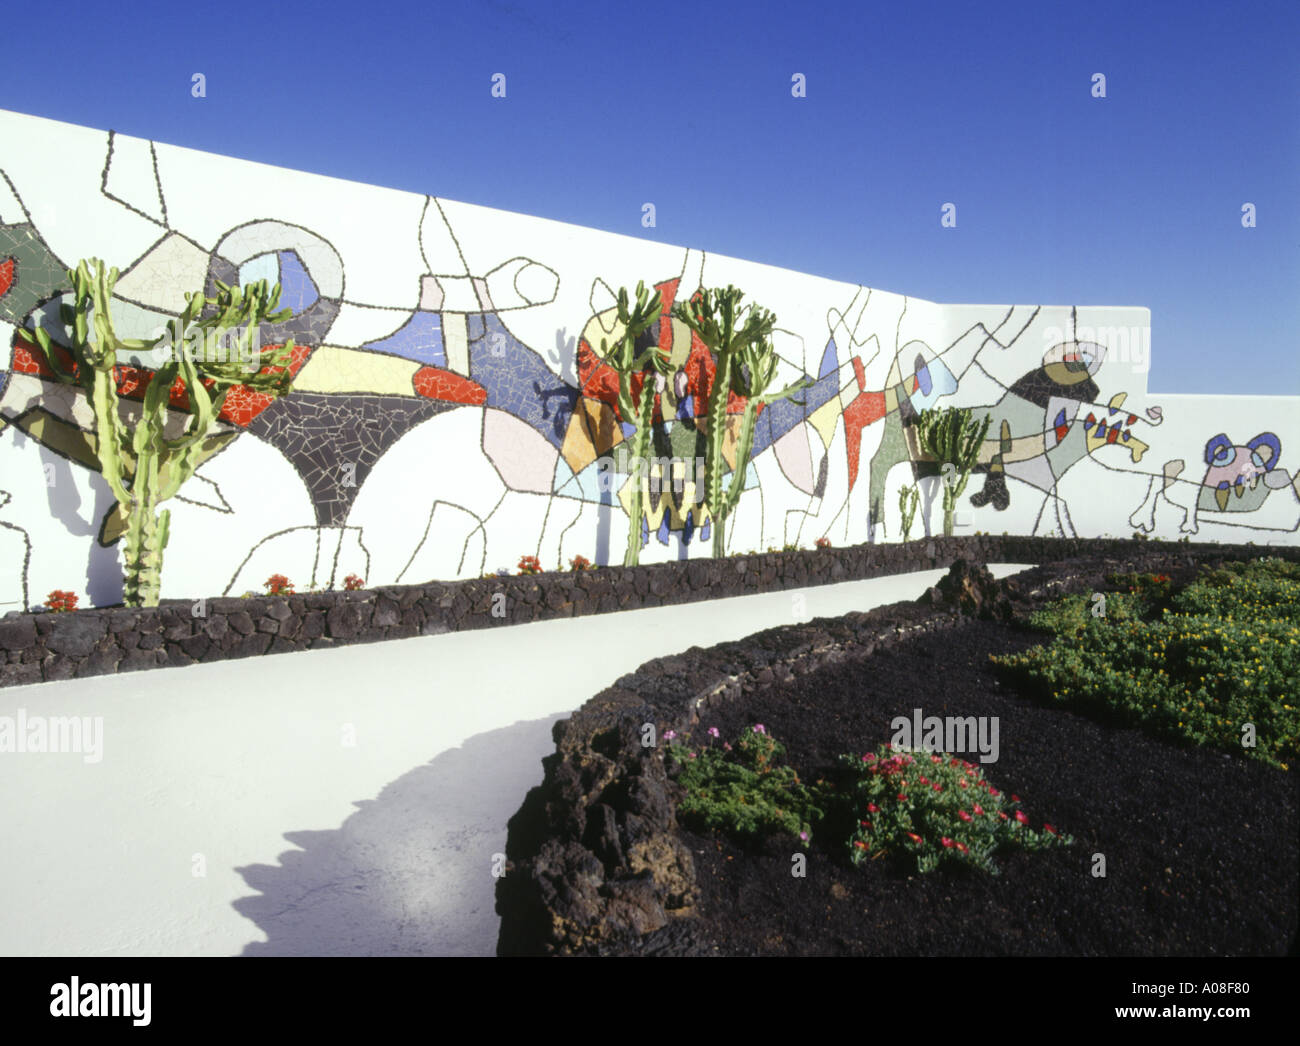 dh Cesar Manrique casa TARO DE TAHICHE LANZAROTE Cesar Manriques casa ospita giardino parete con pittura murale arte Foto Stock